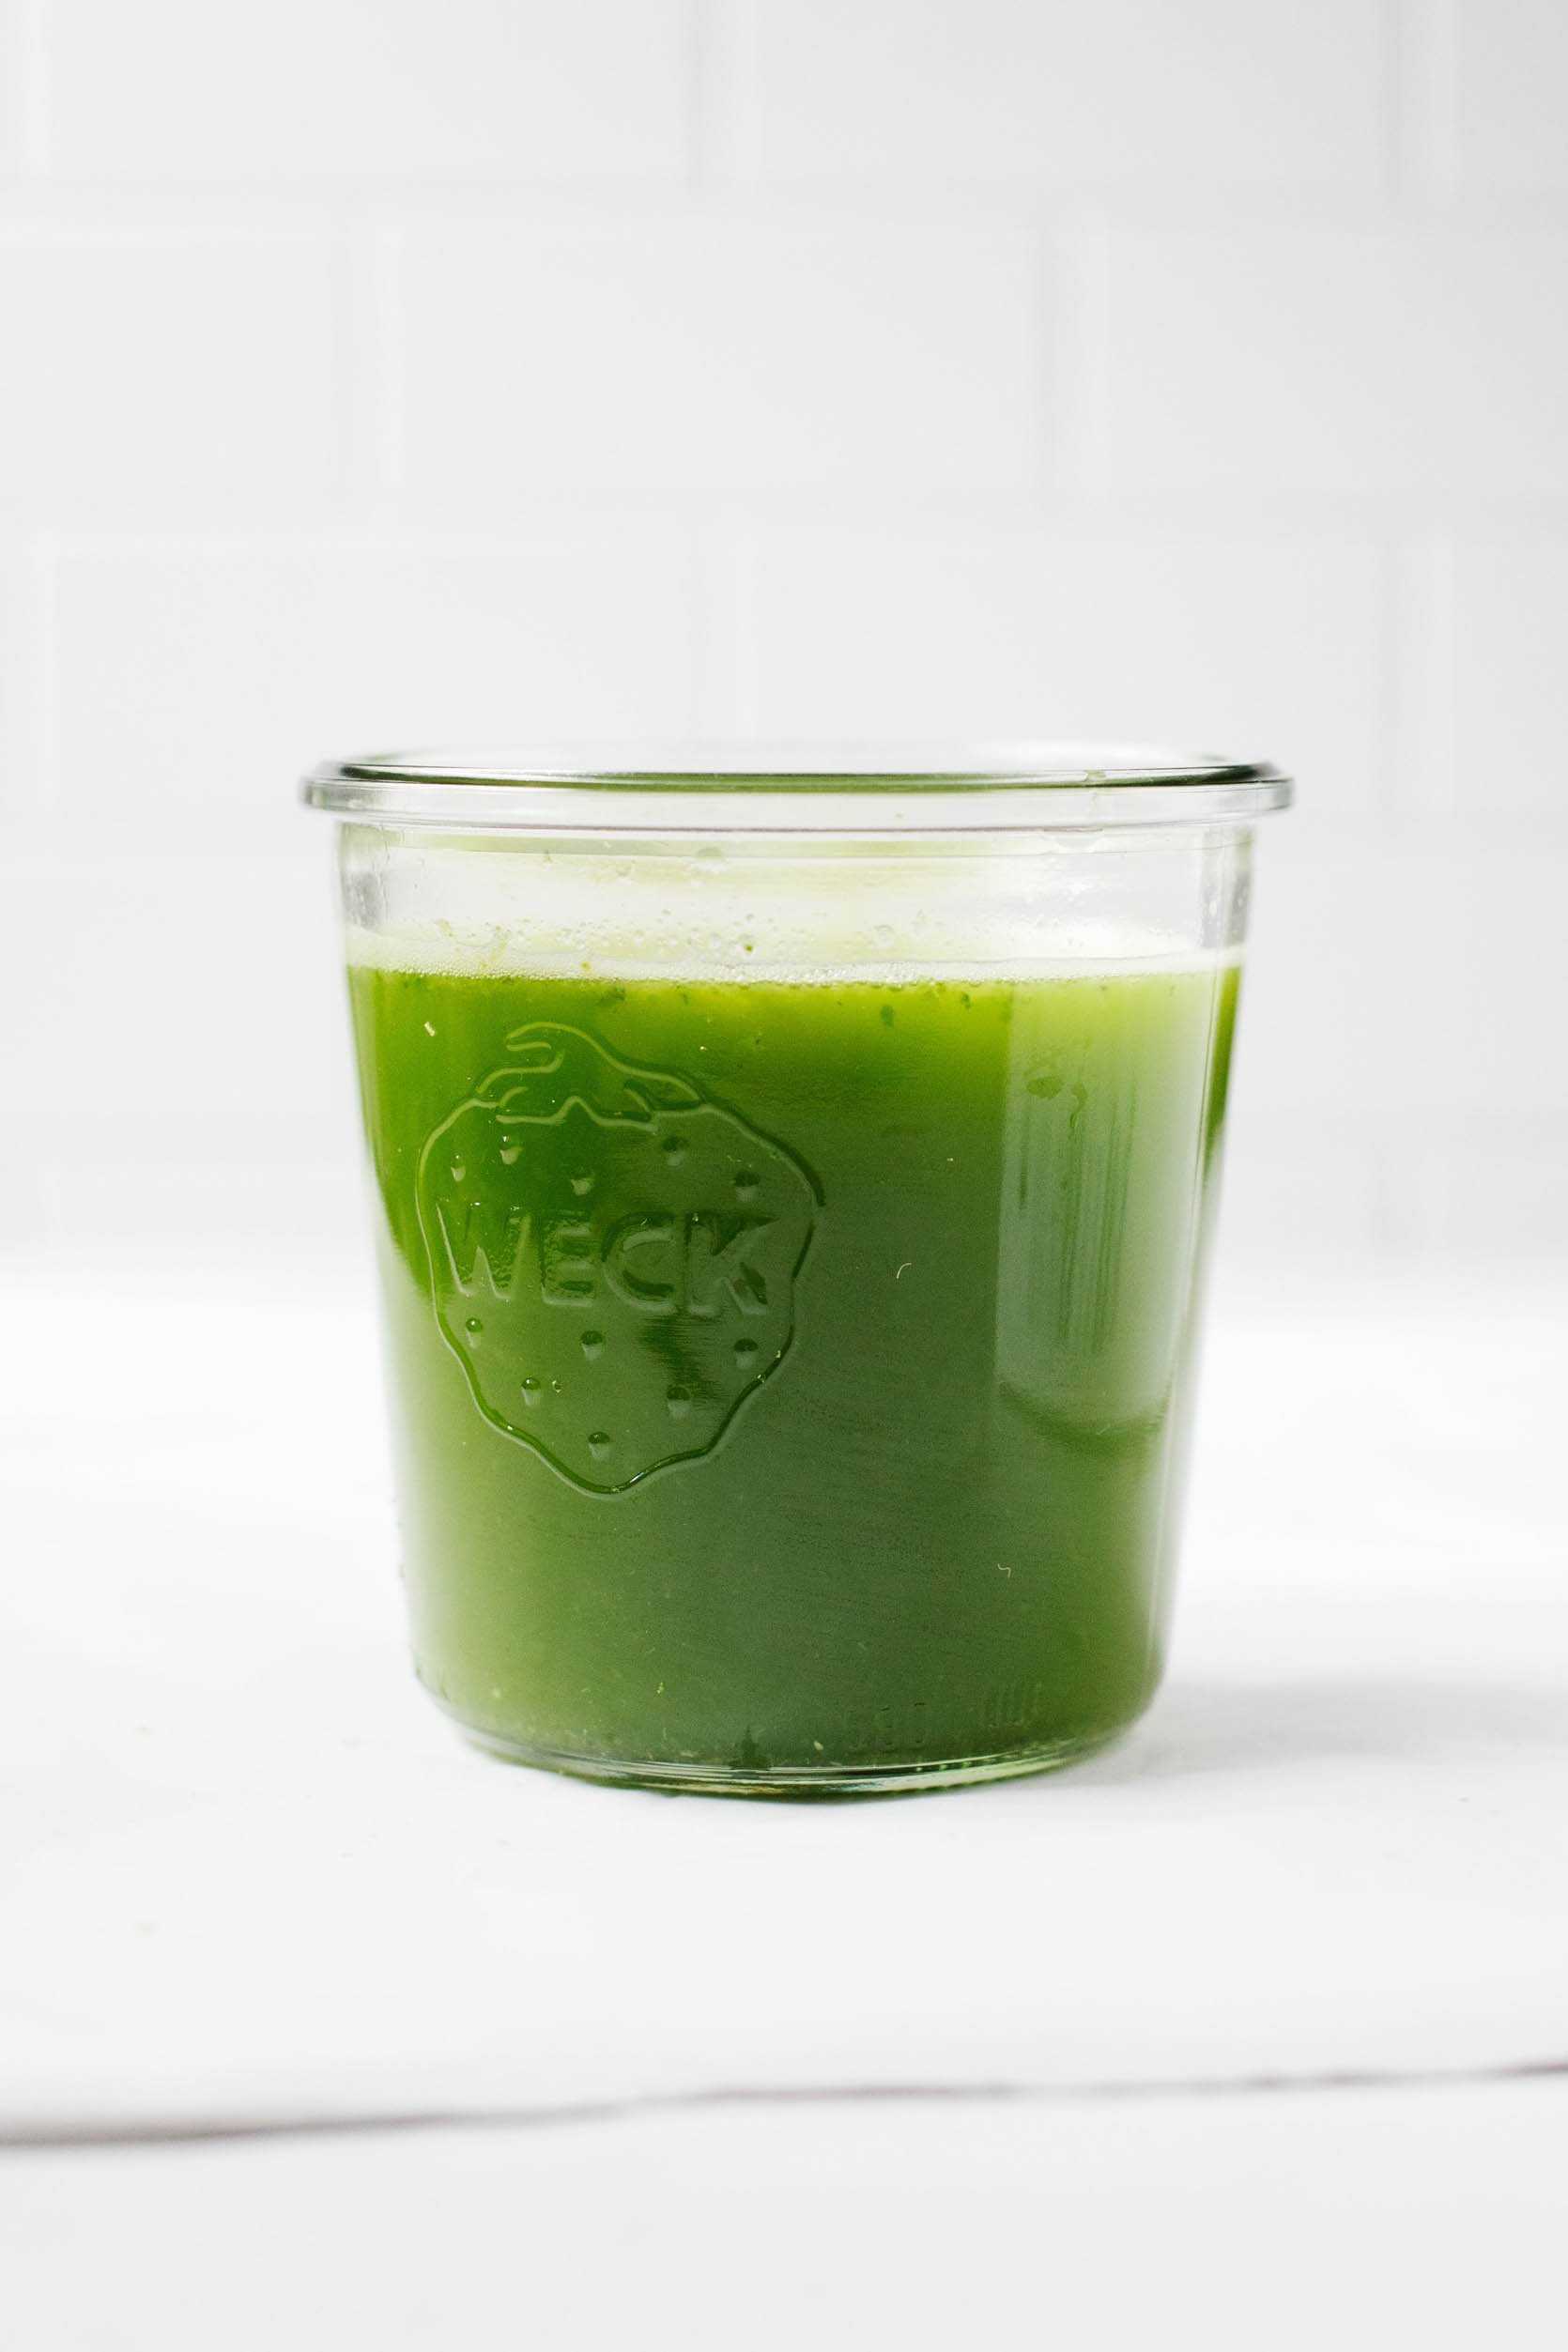 https://www.thefullhelping.com/wp-content/uploads/2013/03/Easy-green-juice-5.jpg